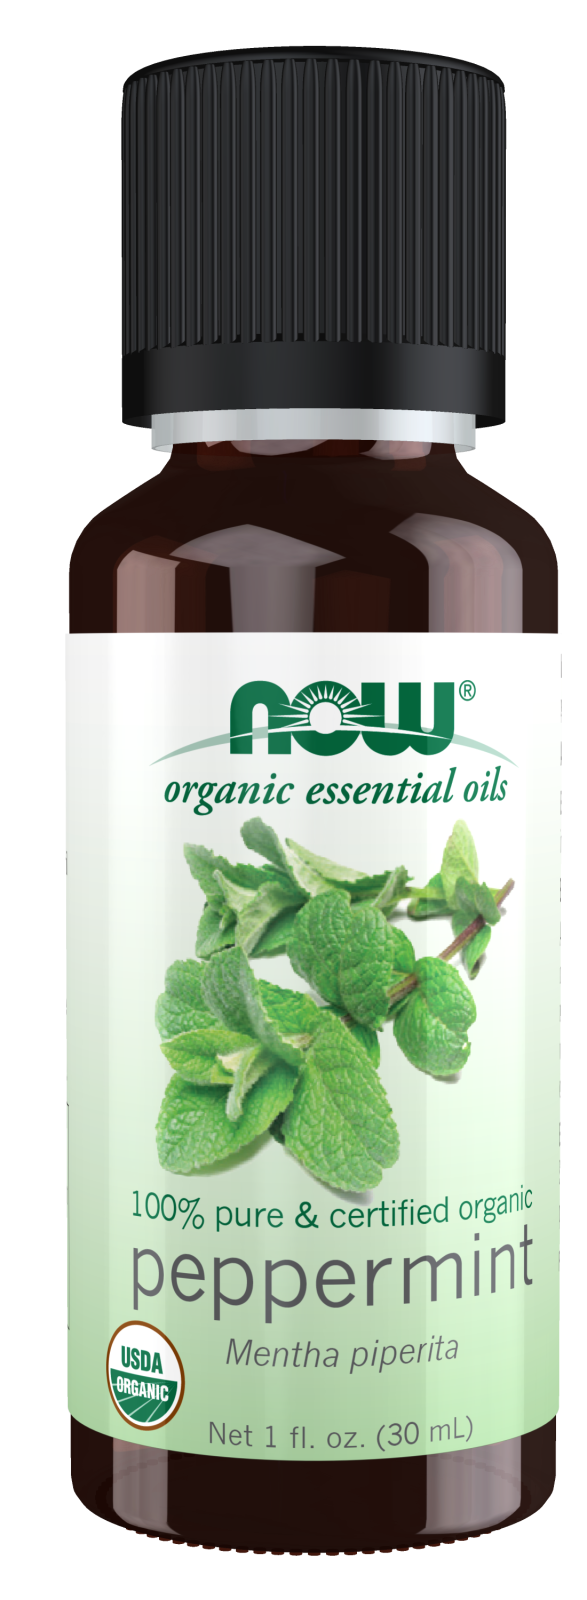 Peppermint Oil, Organic - 1 fl. oz. Bottle Front